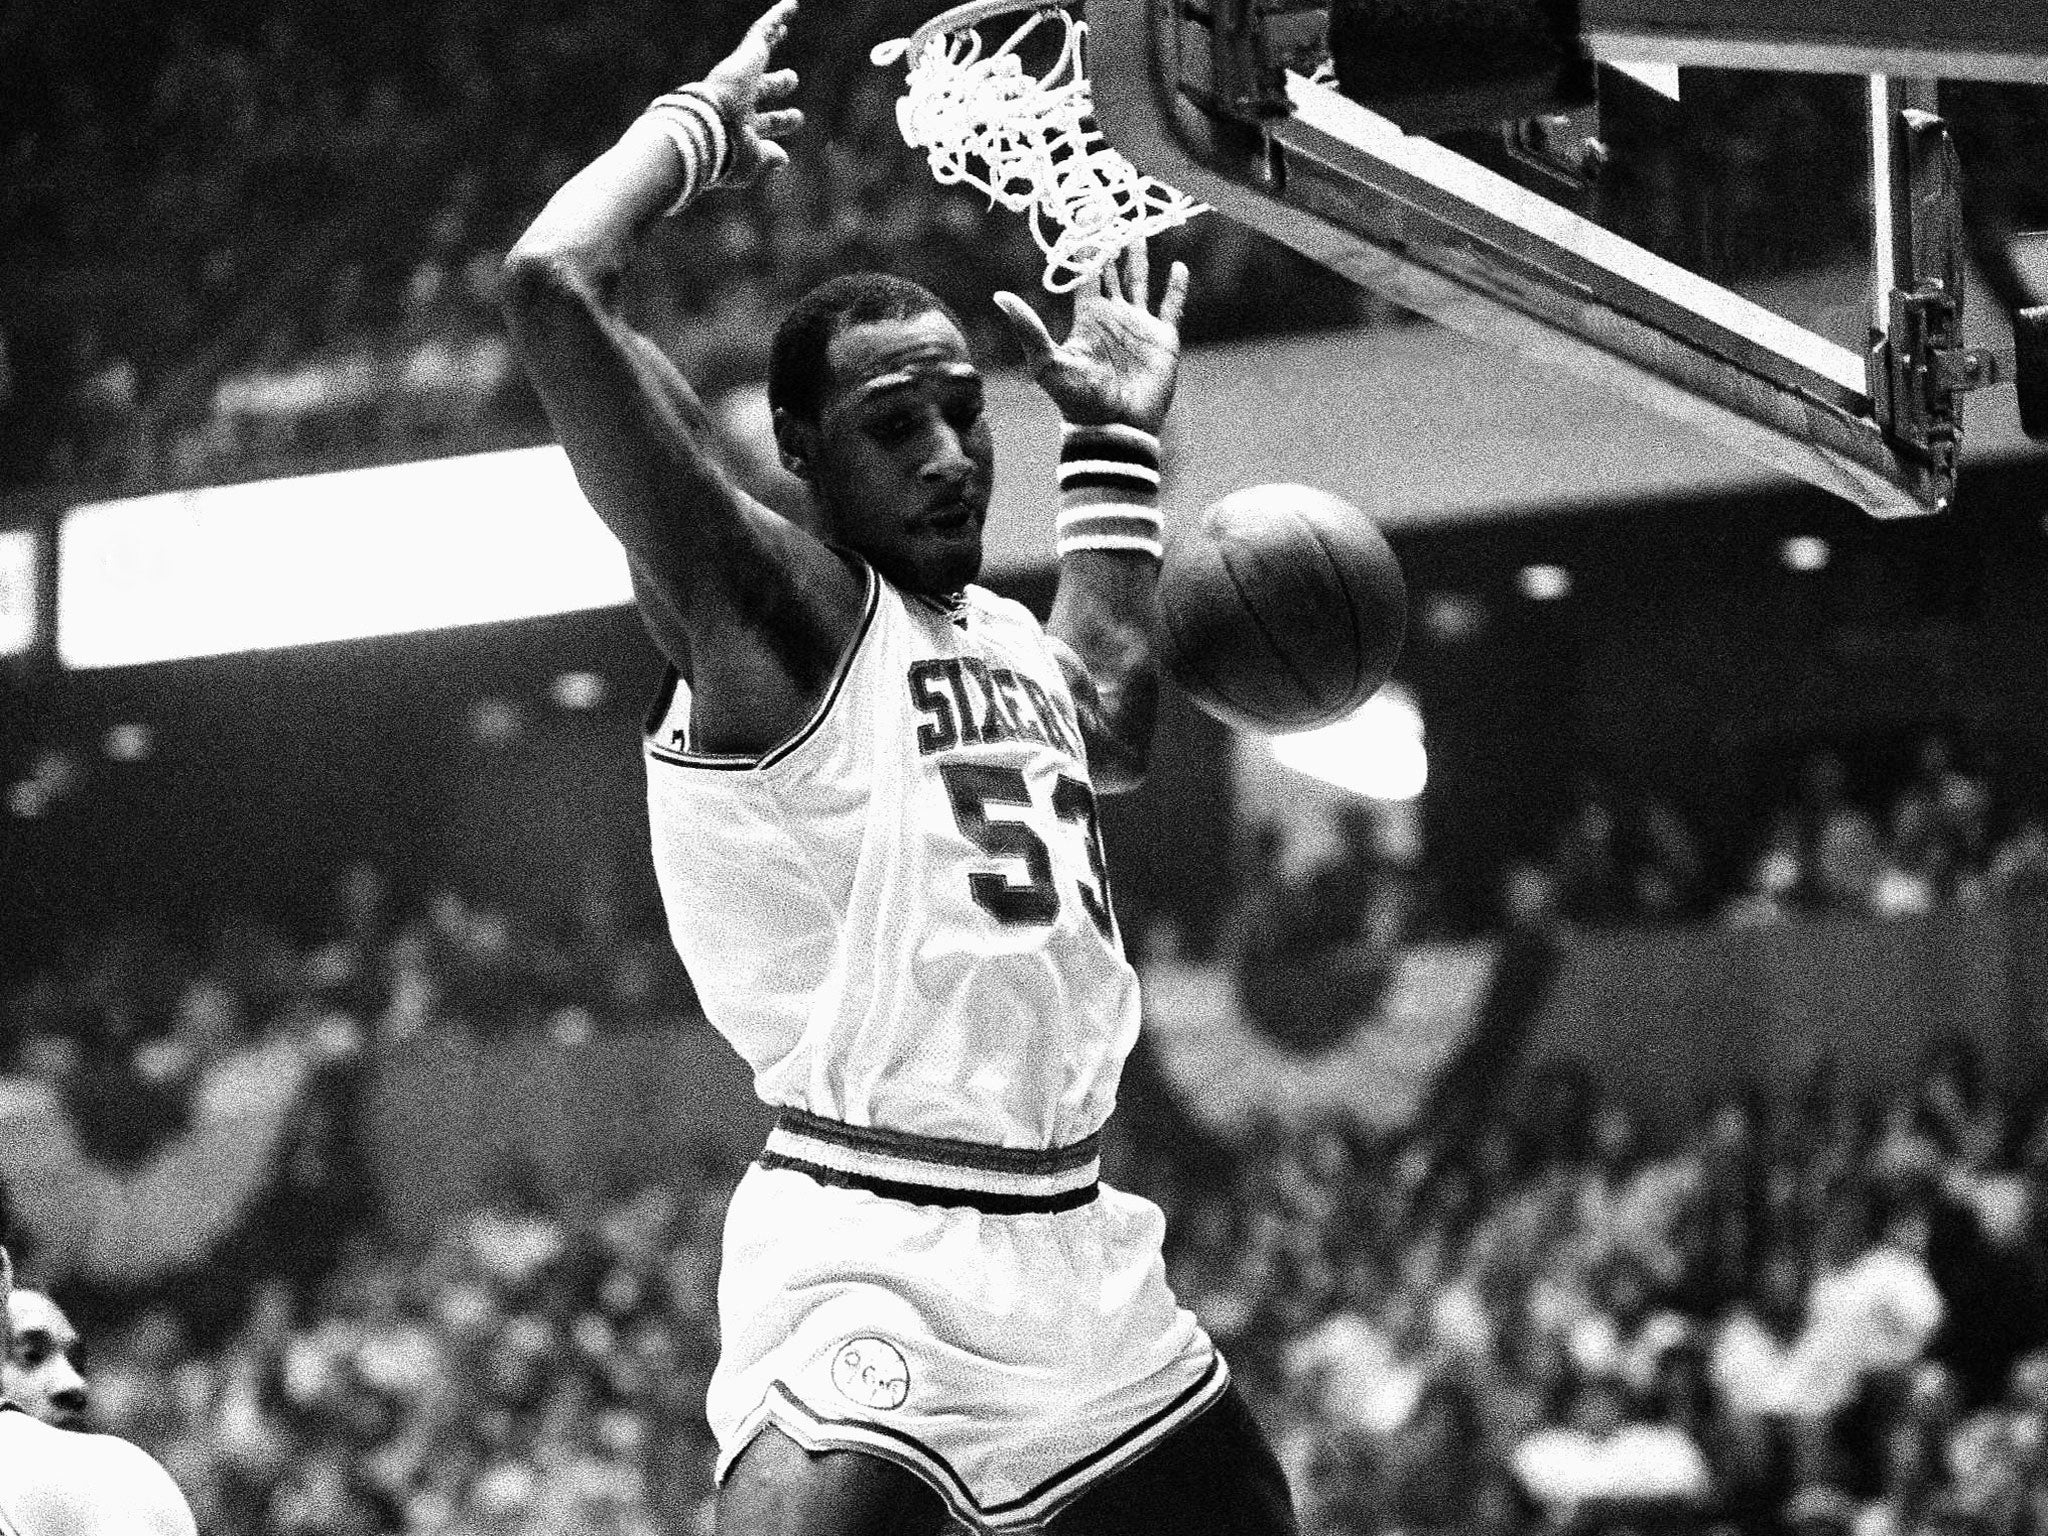 Darryl Dawkins dunks against the Atlanta Hawks in an NBA playoff game in Philadelphia in April 1980